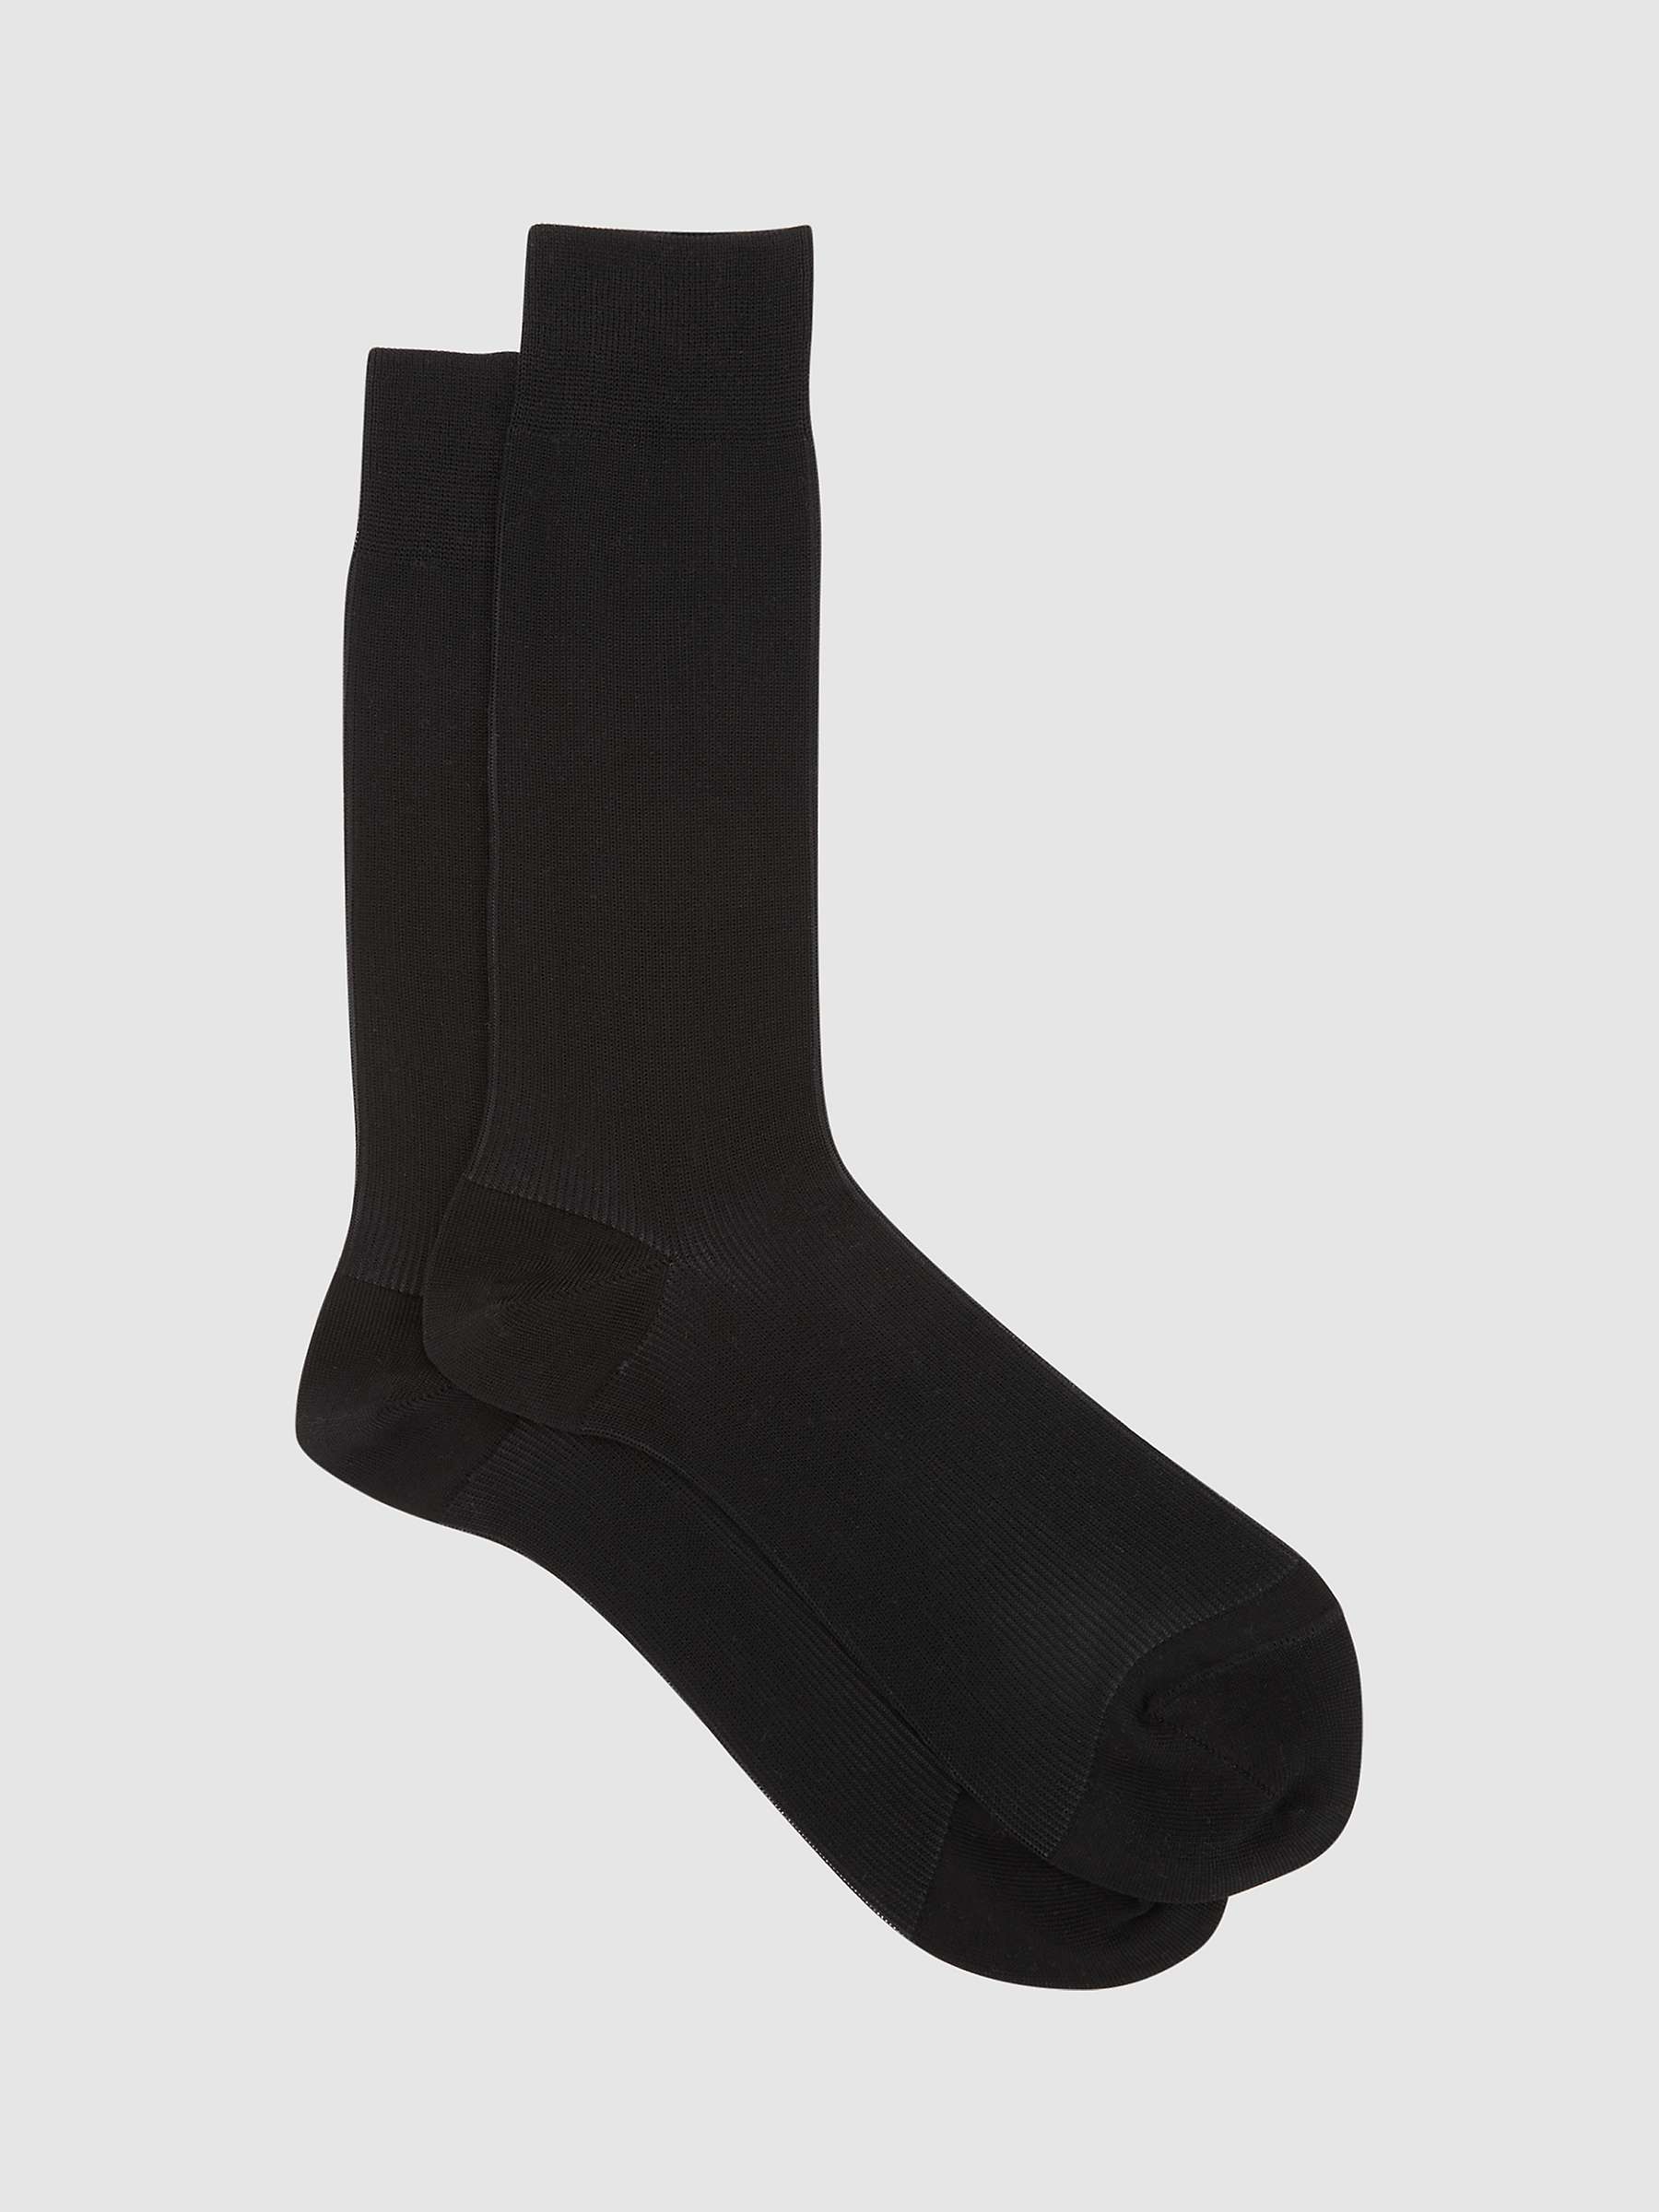 Reiss Cory Two Tone Formal Socks, Black at John Lewis & Partners